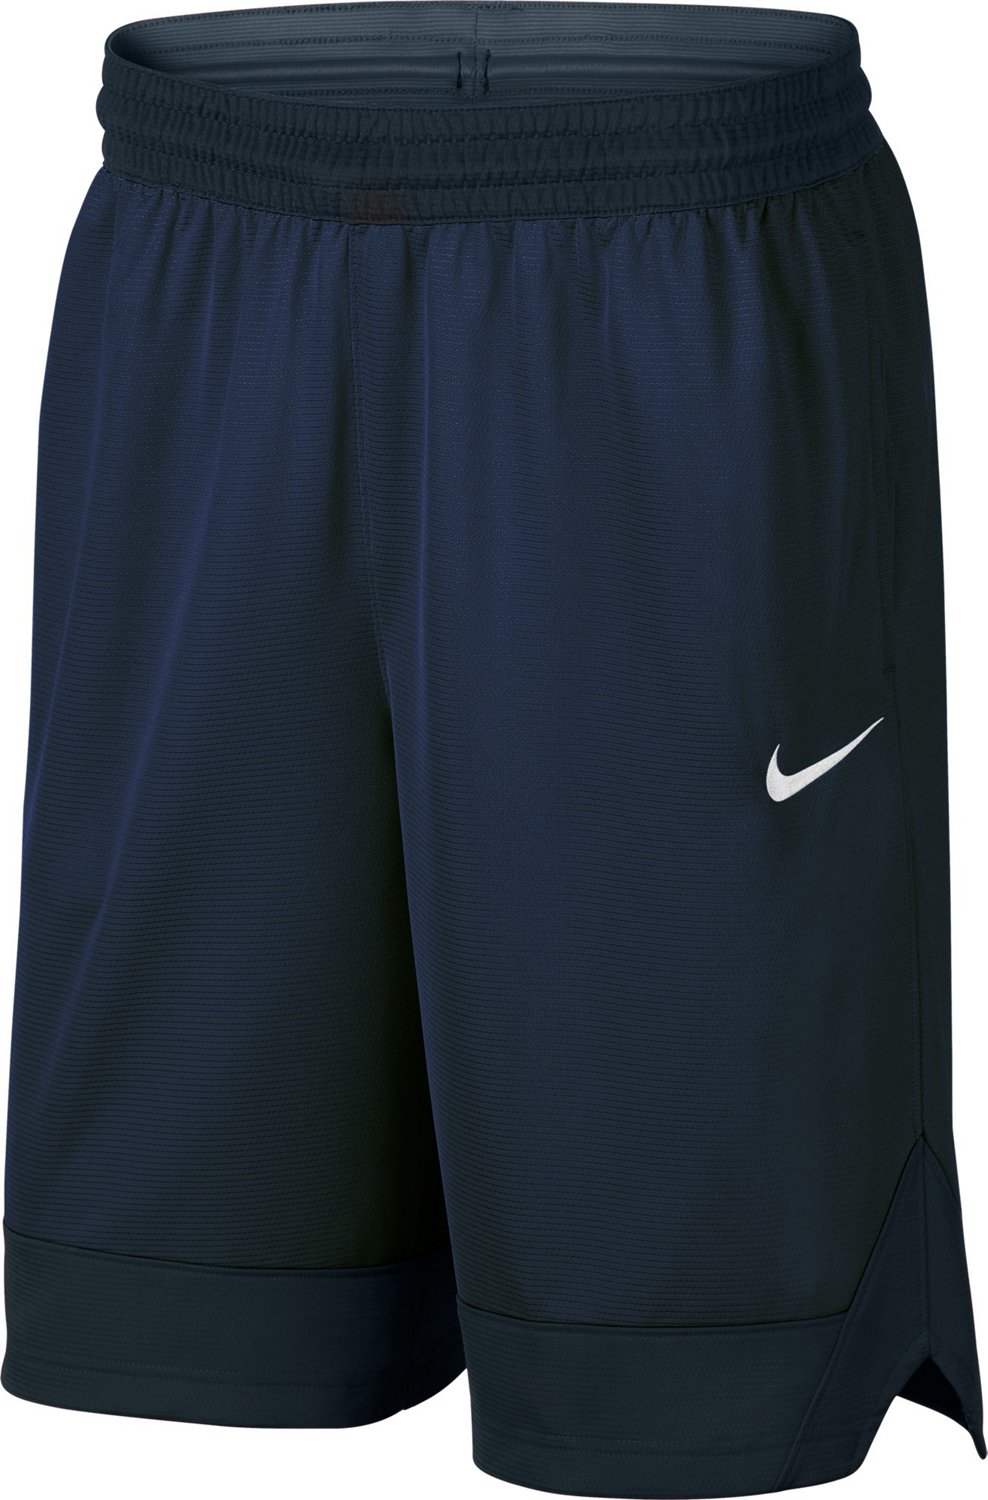 Nike Men's Dry Icon Basketball Shorts 